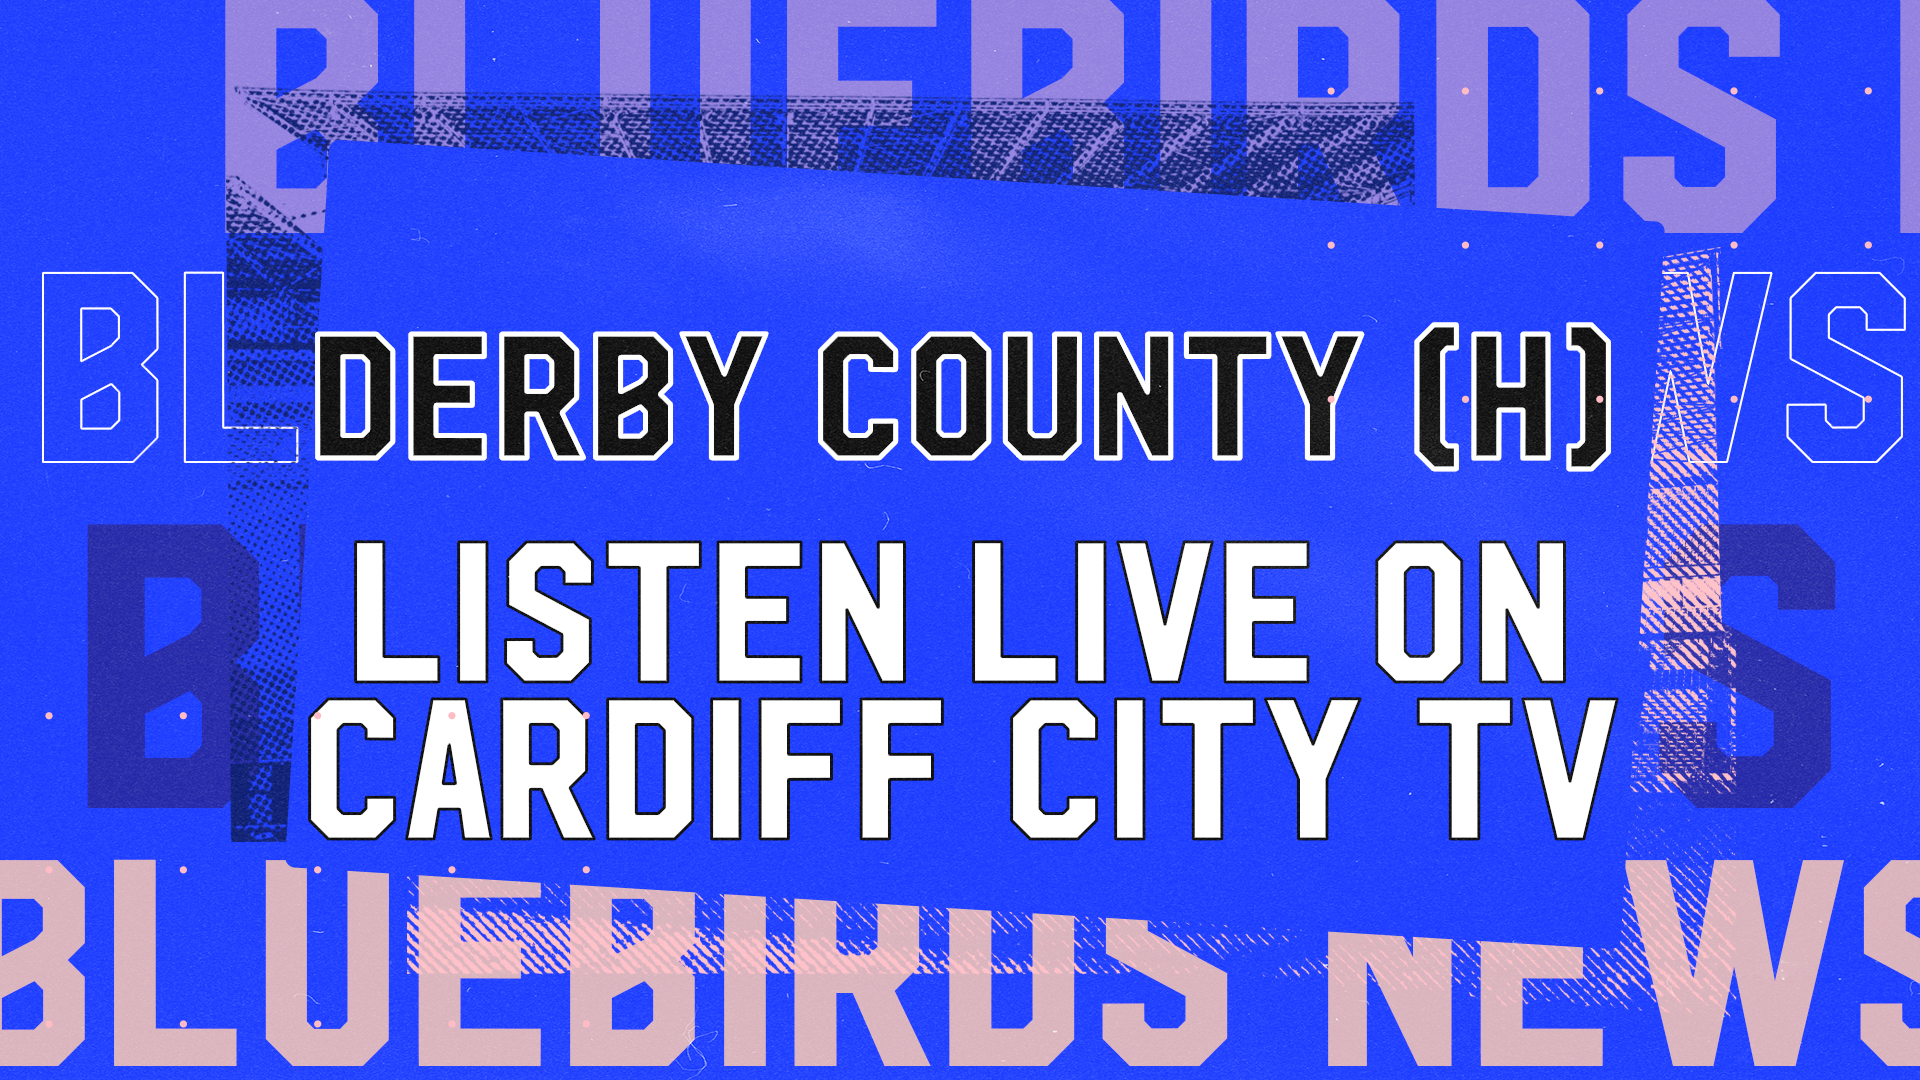 Derby County CCTV